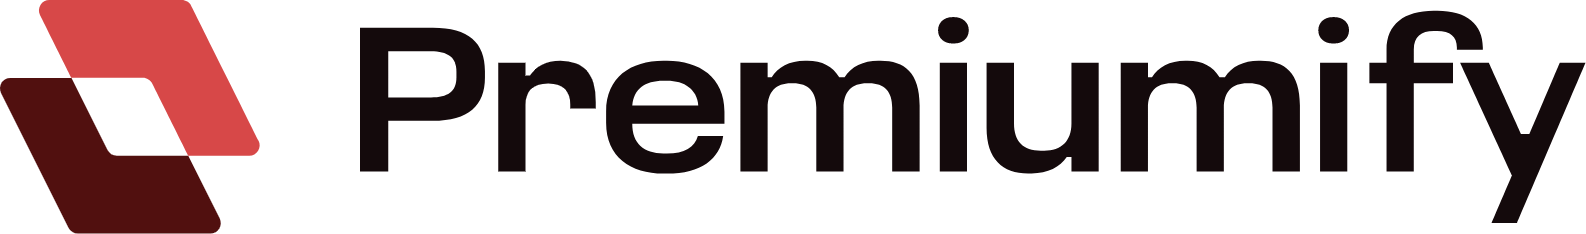 Premiumify logo